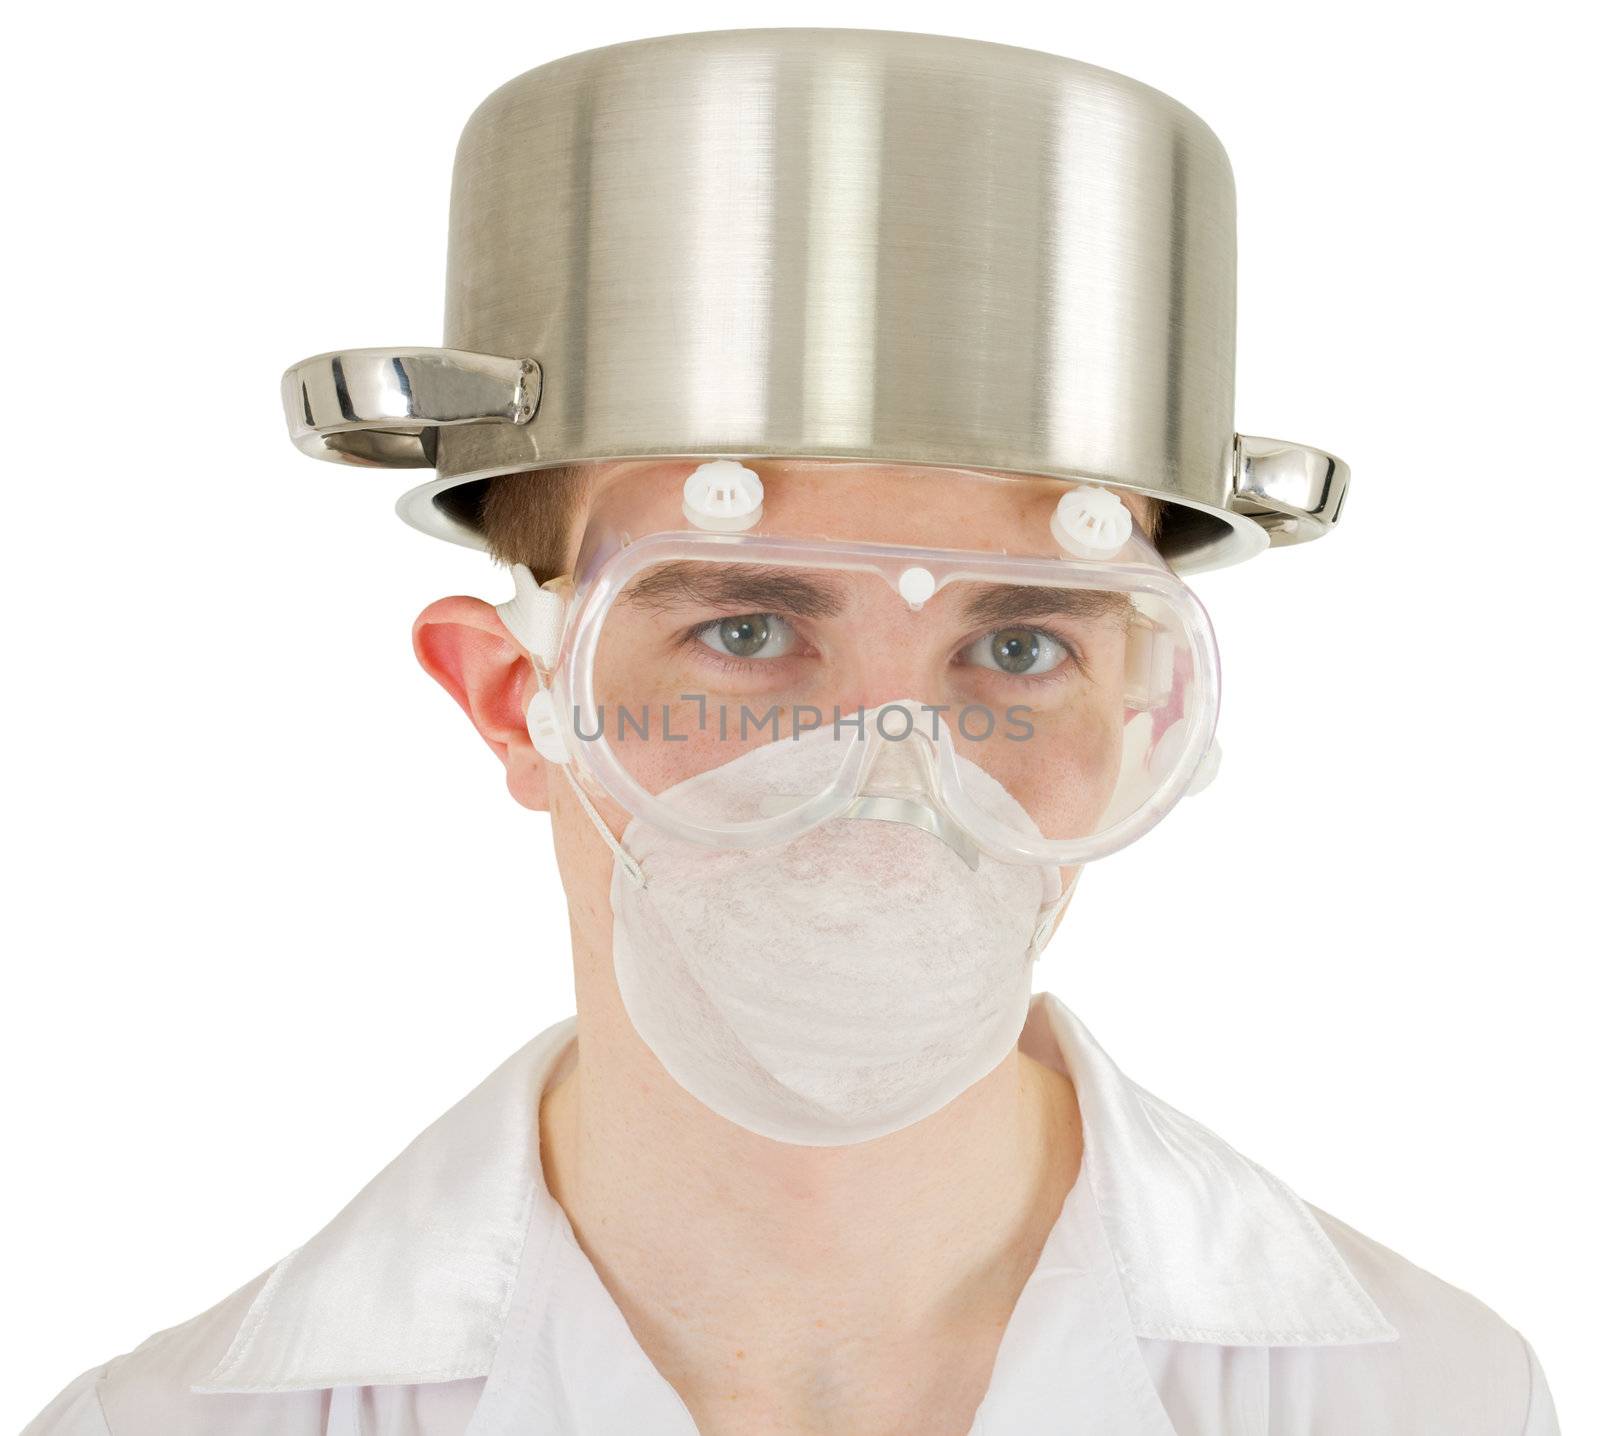 Scientist with steel saucepan on head instead of helmet